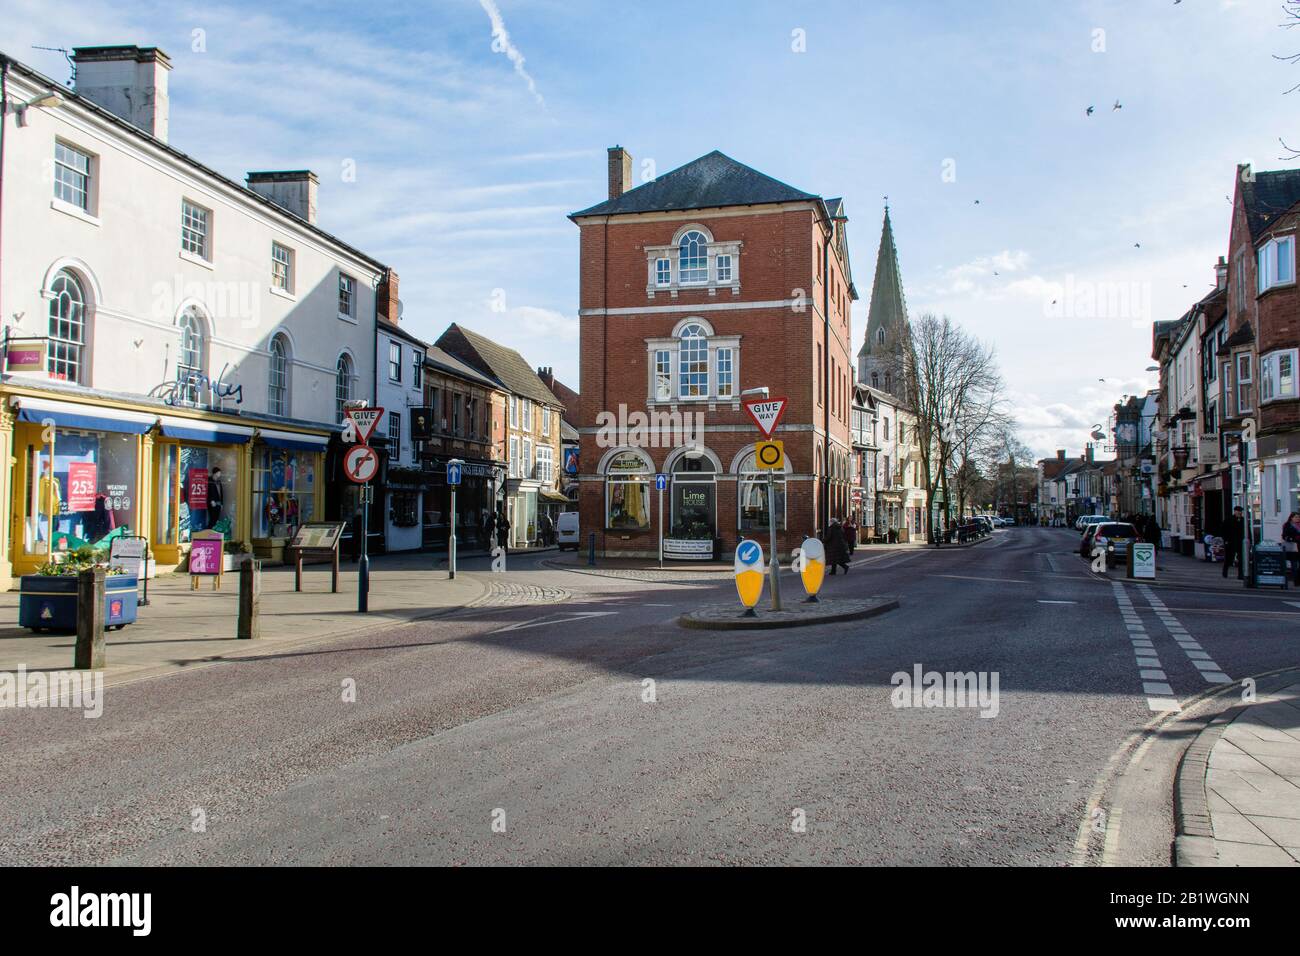 high street, market Harborough, Leicestershire Stock Photo